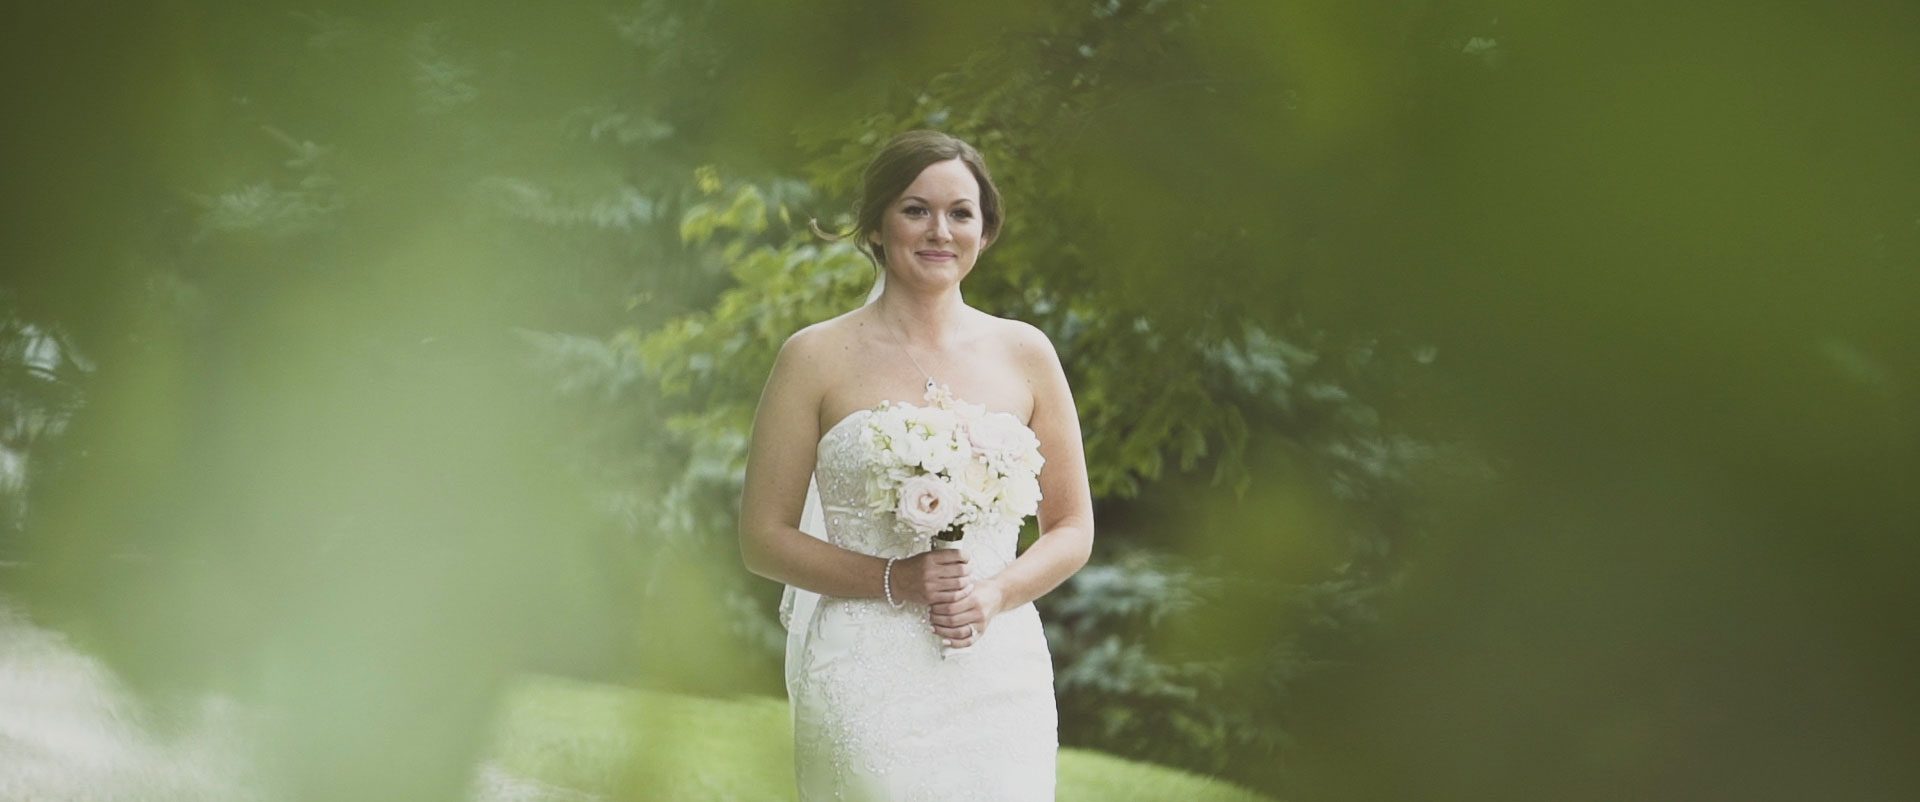 cambium farms wedding video first look bride